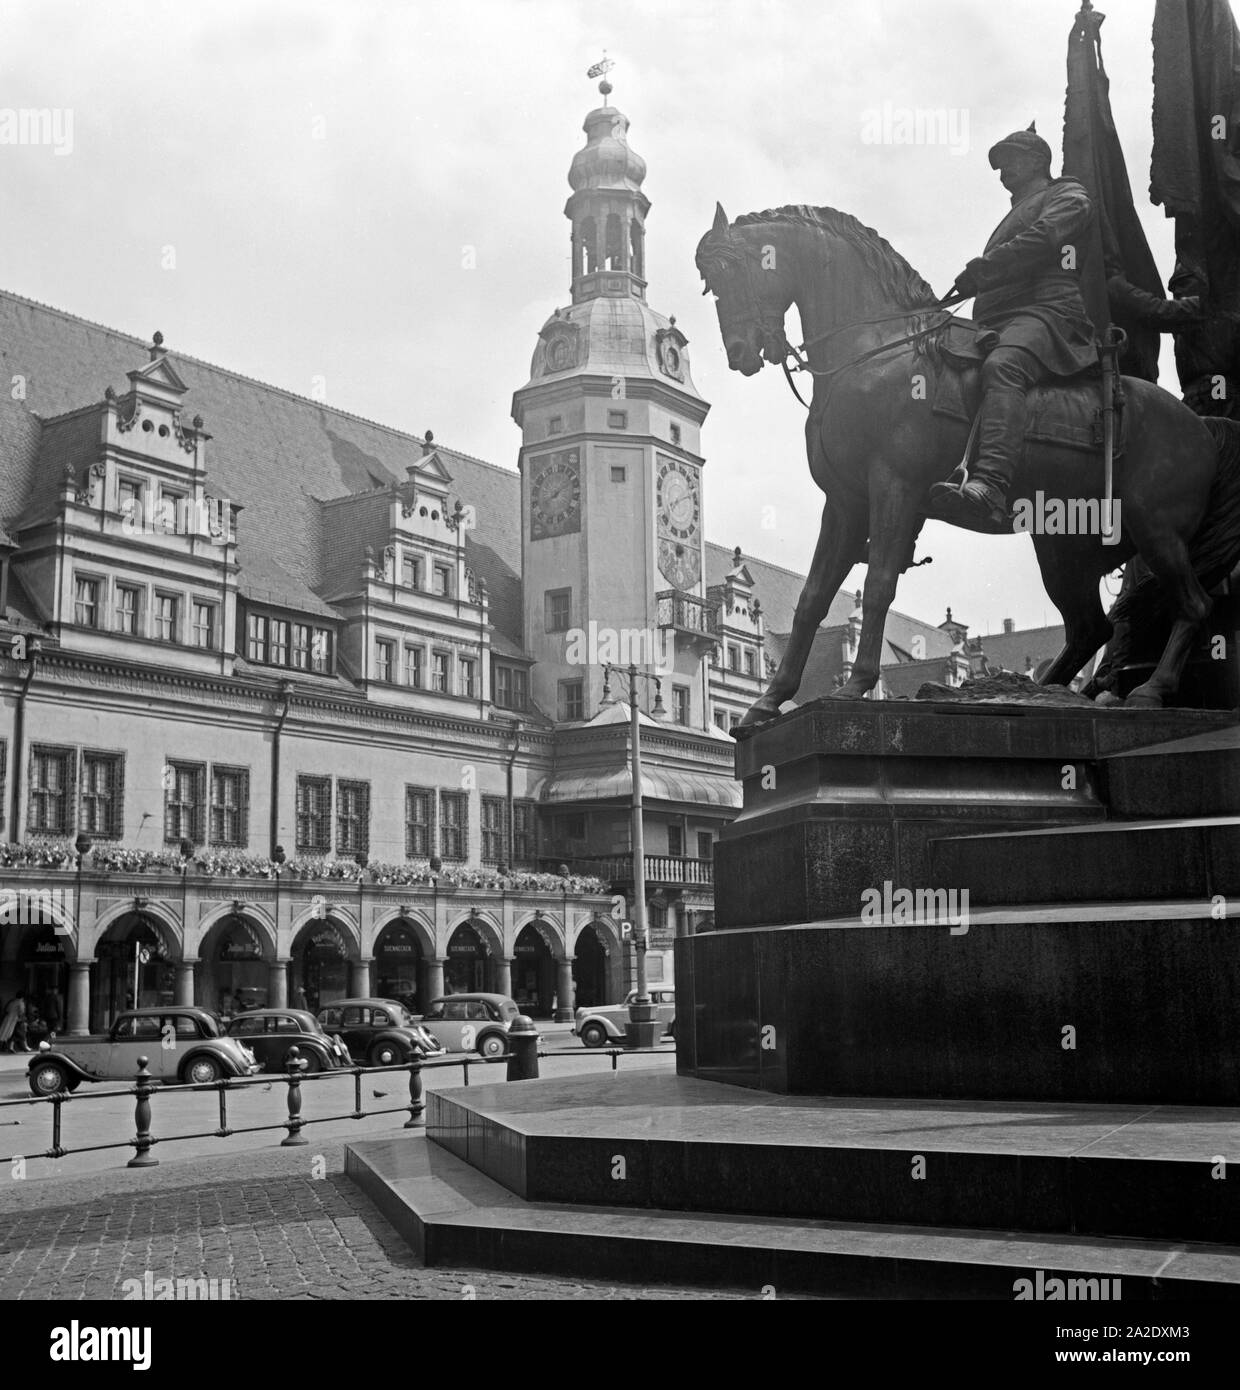 Das alte Rathaus di Lipsia mit einer Figurengruppe mit Otto von Bismarck davor, Deutschland 1930er Jahre. Il vecchio Municipio di Lipsia con un memoriale di Bismarck davanti, Germania 1930s. Foto Stock